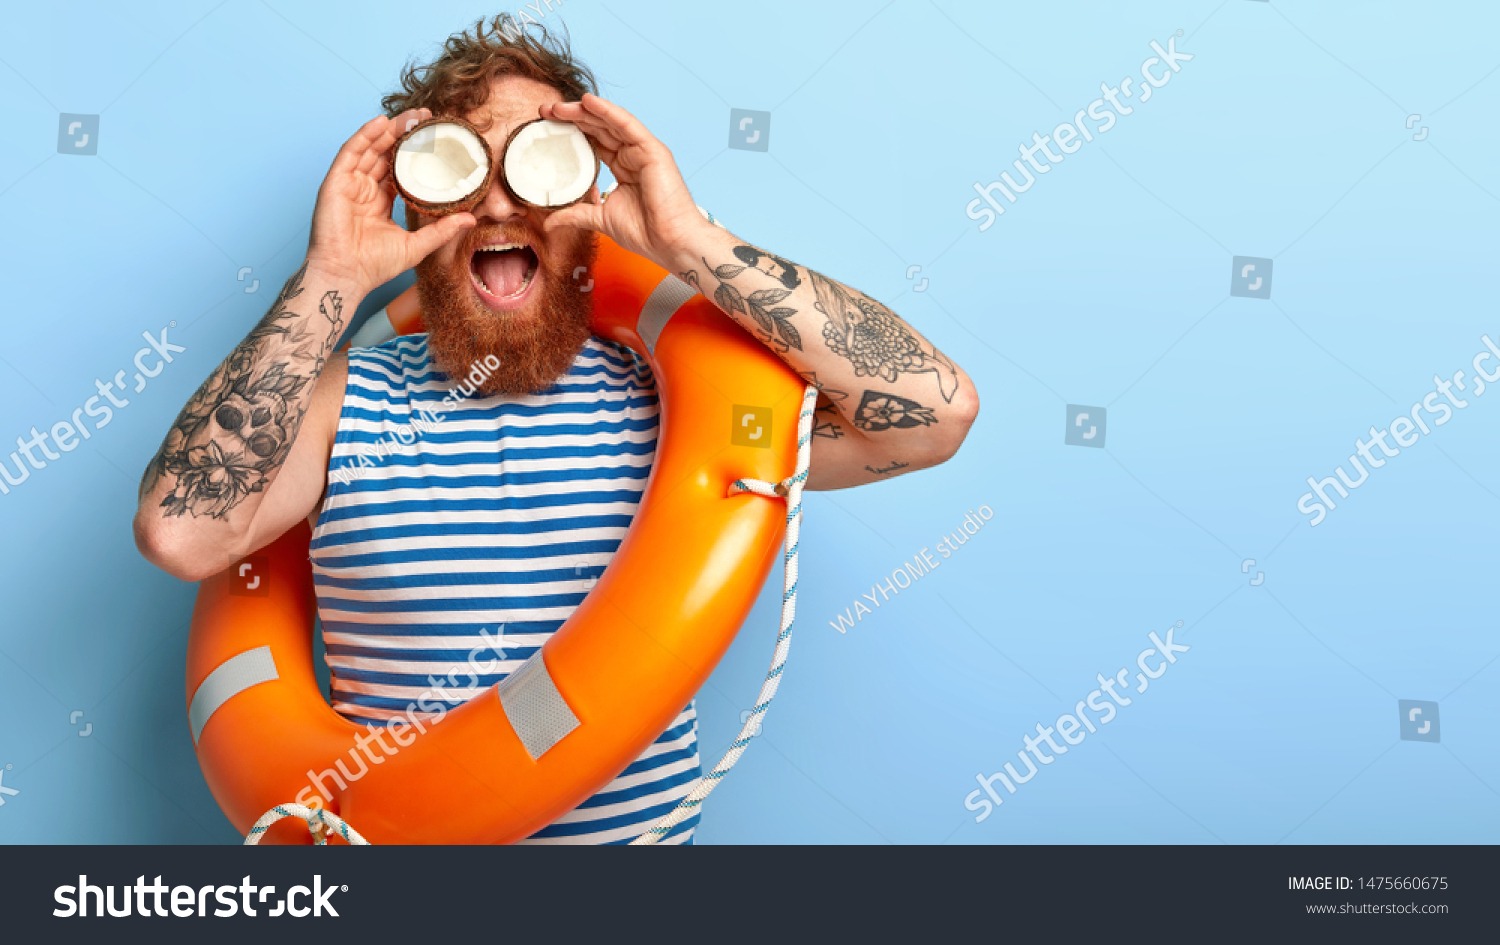 Funny lifeguard Images, Stock Photos & Vectors | Shutterstock